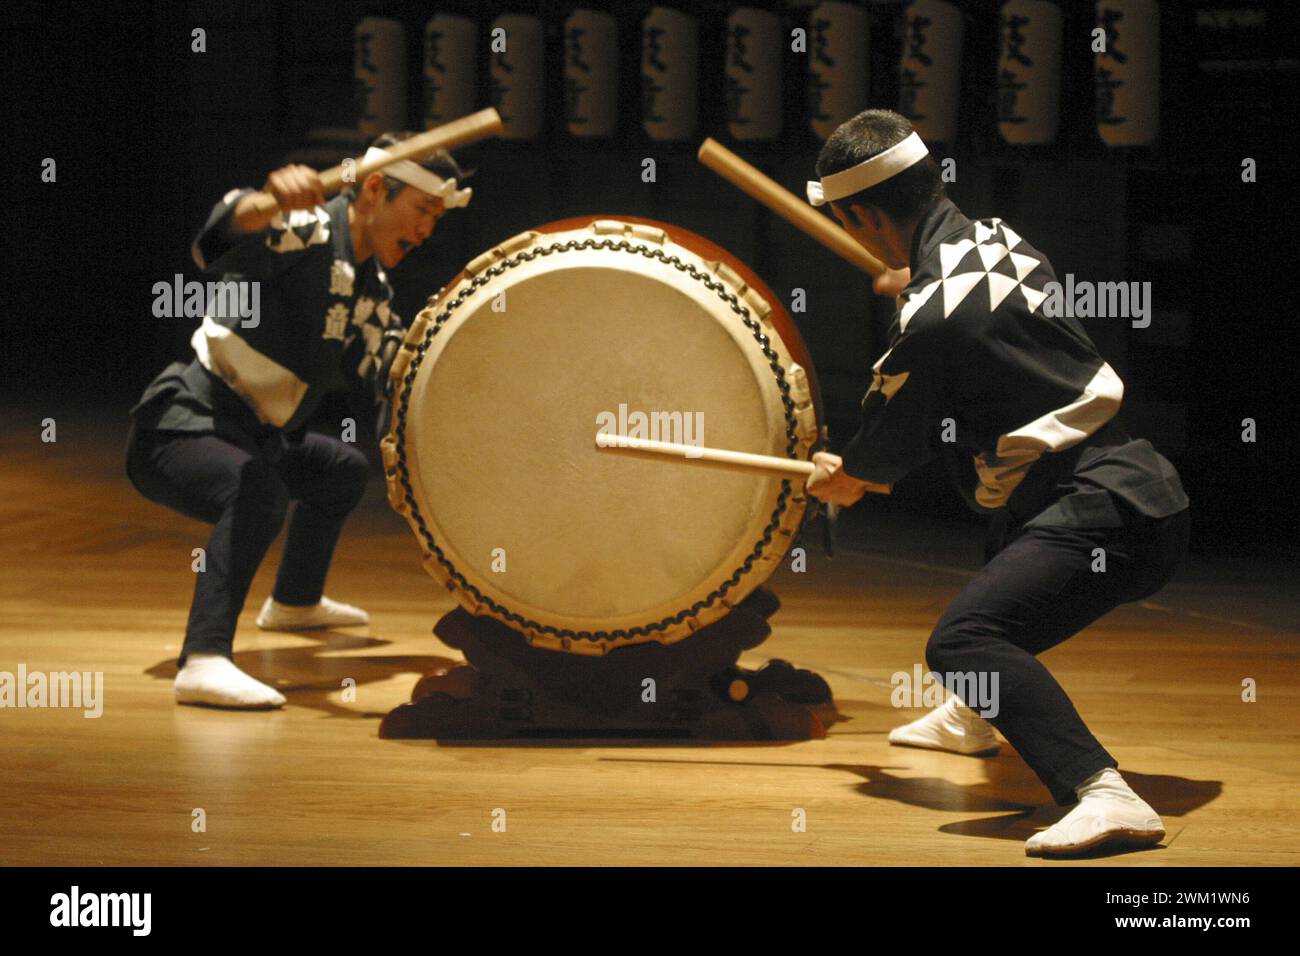 MME4734676 Milan, 2004. Kodo, Japanese Taiko Performing Arts Ensemble (Taiko is a japanese drum)/Milano, 2004. I Kodo, gruppo giapponese di percussionisti di taiko (tamburo giapponese) -; (add.info.: Milan, 2004. Kodo, Japanese Taiko Performing Arts Ensemble (Taiko is a japanese drum)/Milano, 2004. I Kodo, gruppo giapponese di percussionisti di taiko (tamburo giapponese) -); © Marcello Mencarini. All rights reserved 2024. Stock Photo